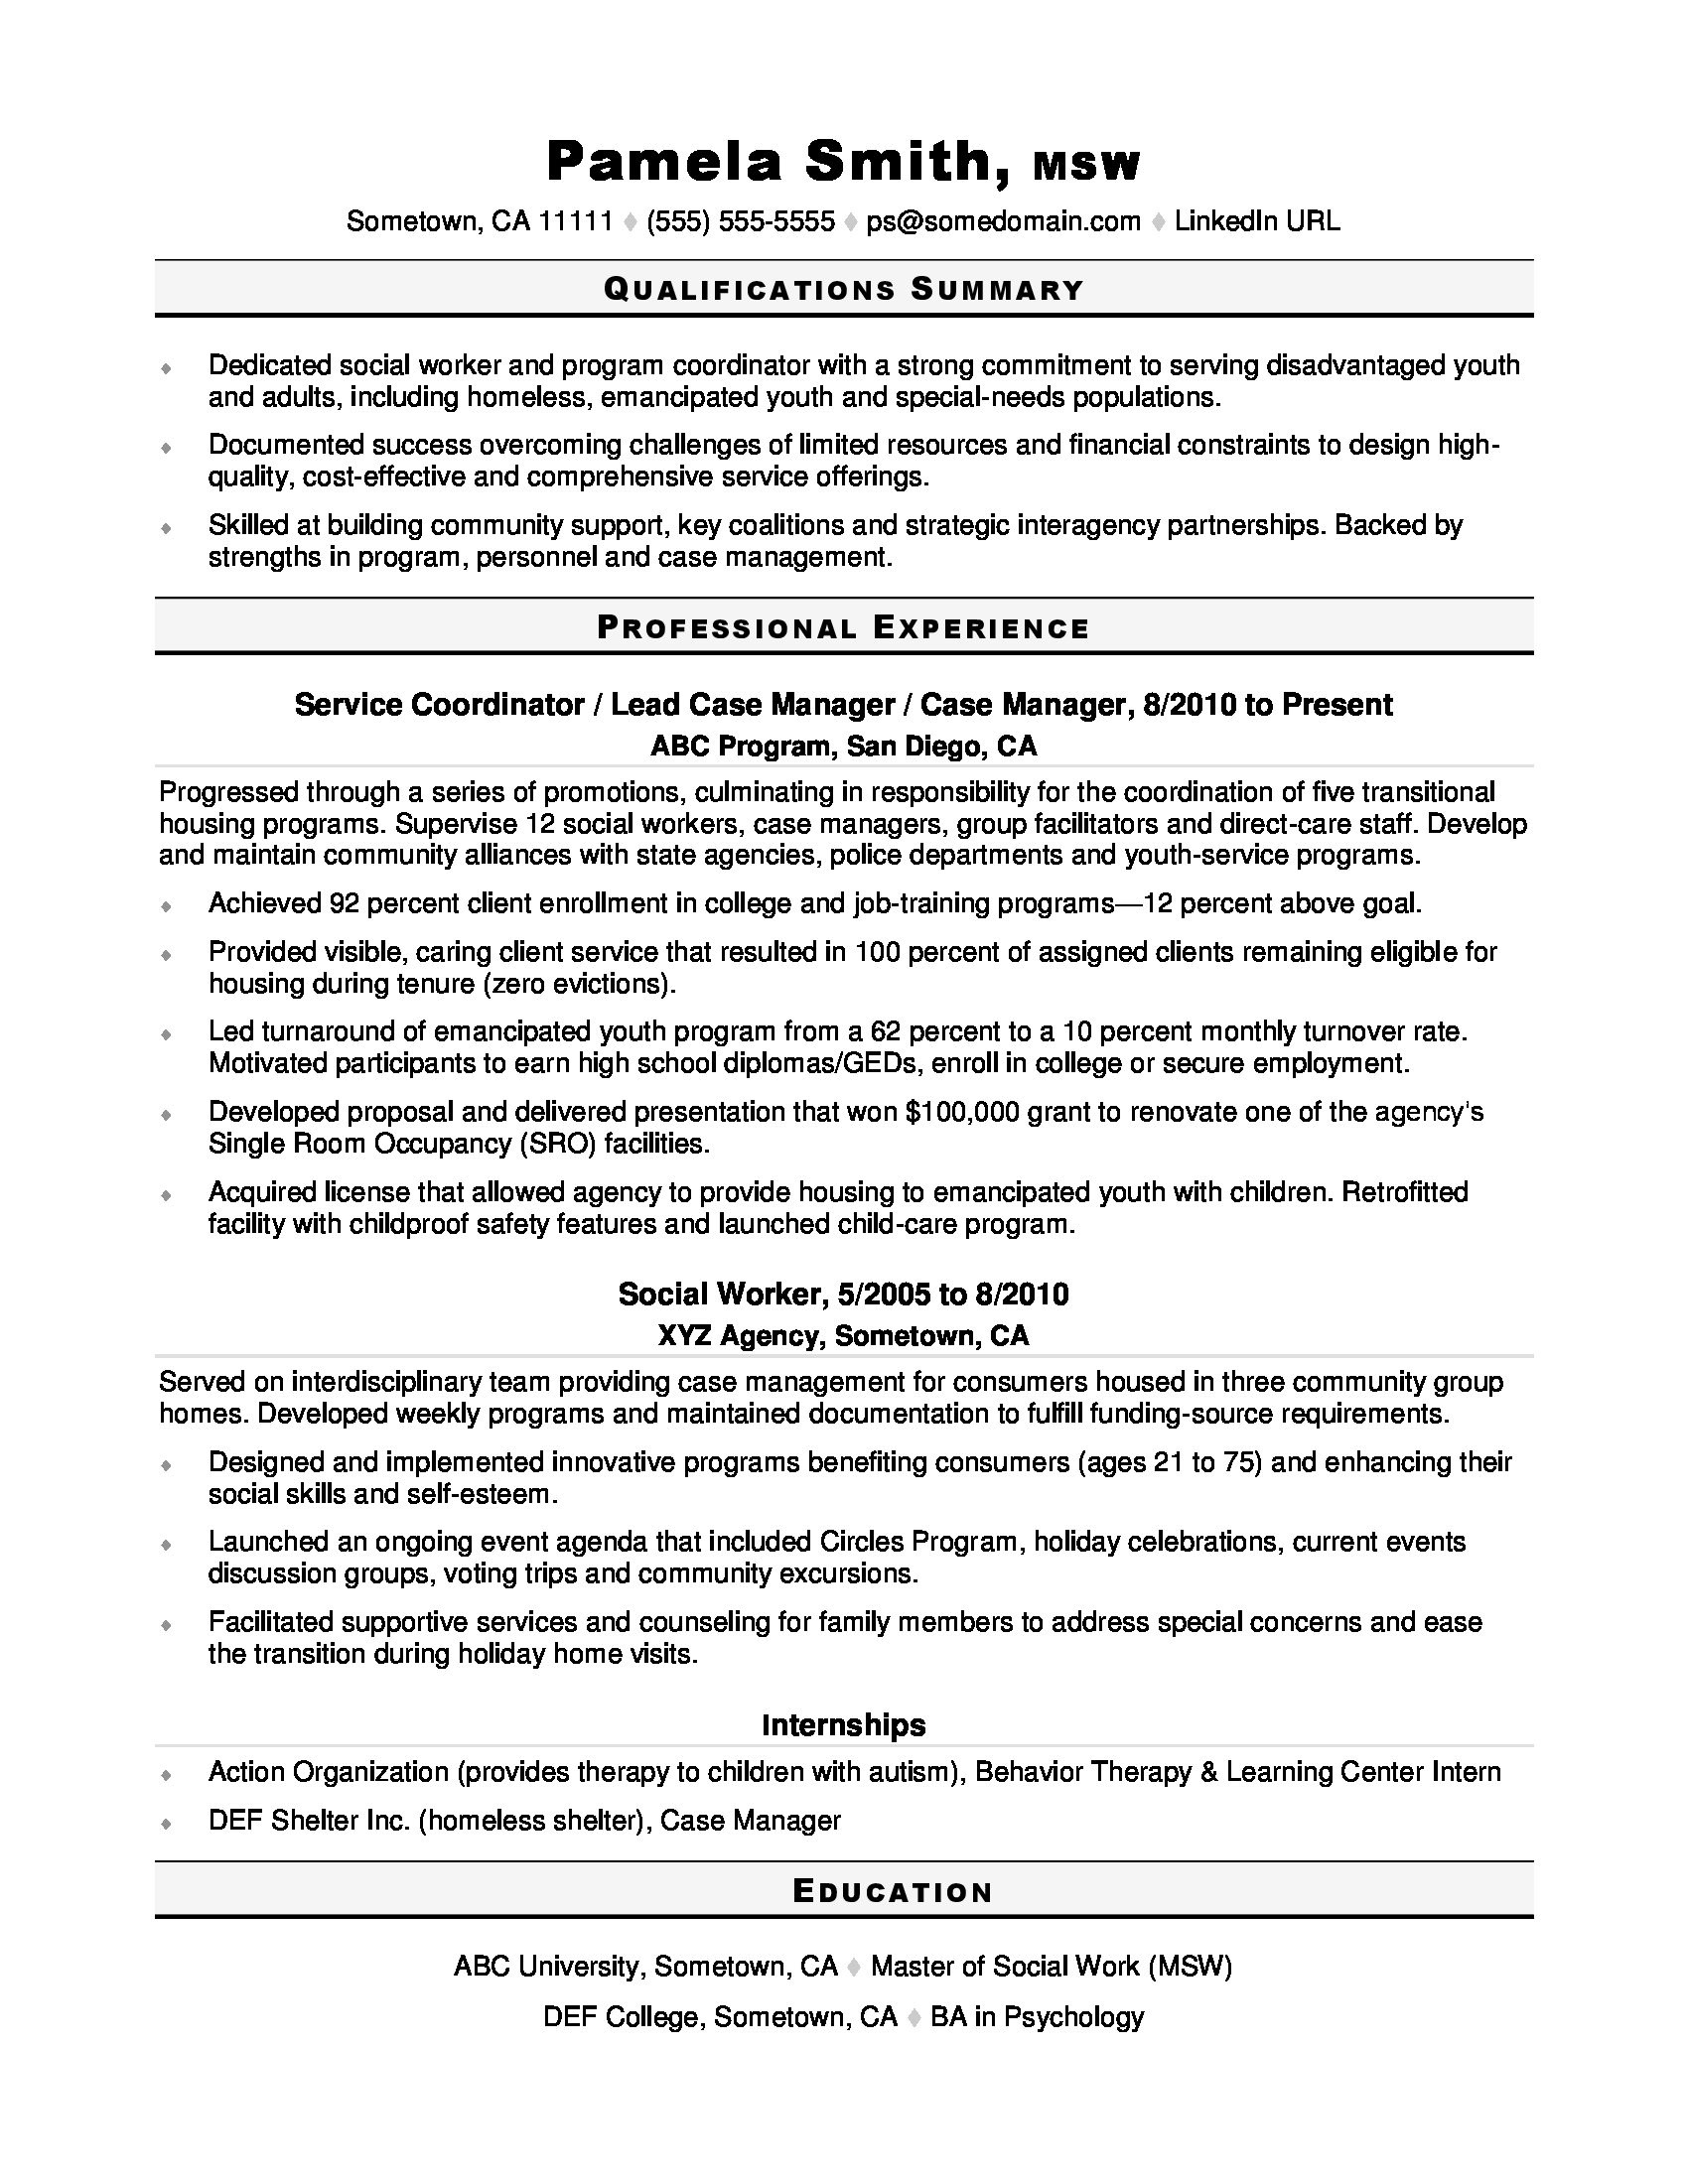 School social Work Intern Resume Sample social Work Resume Monster.com